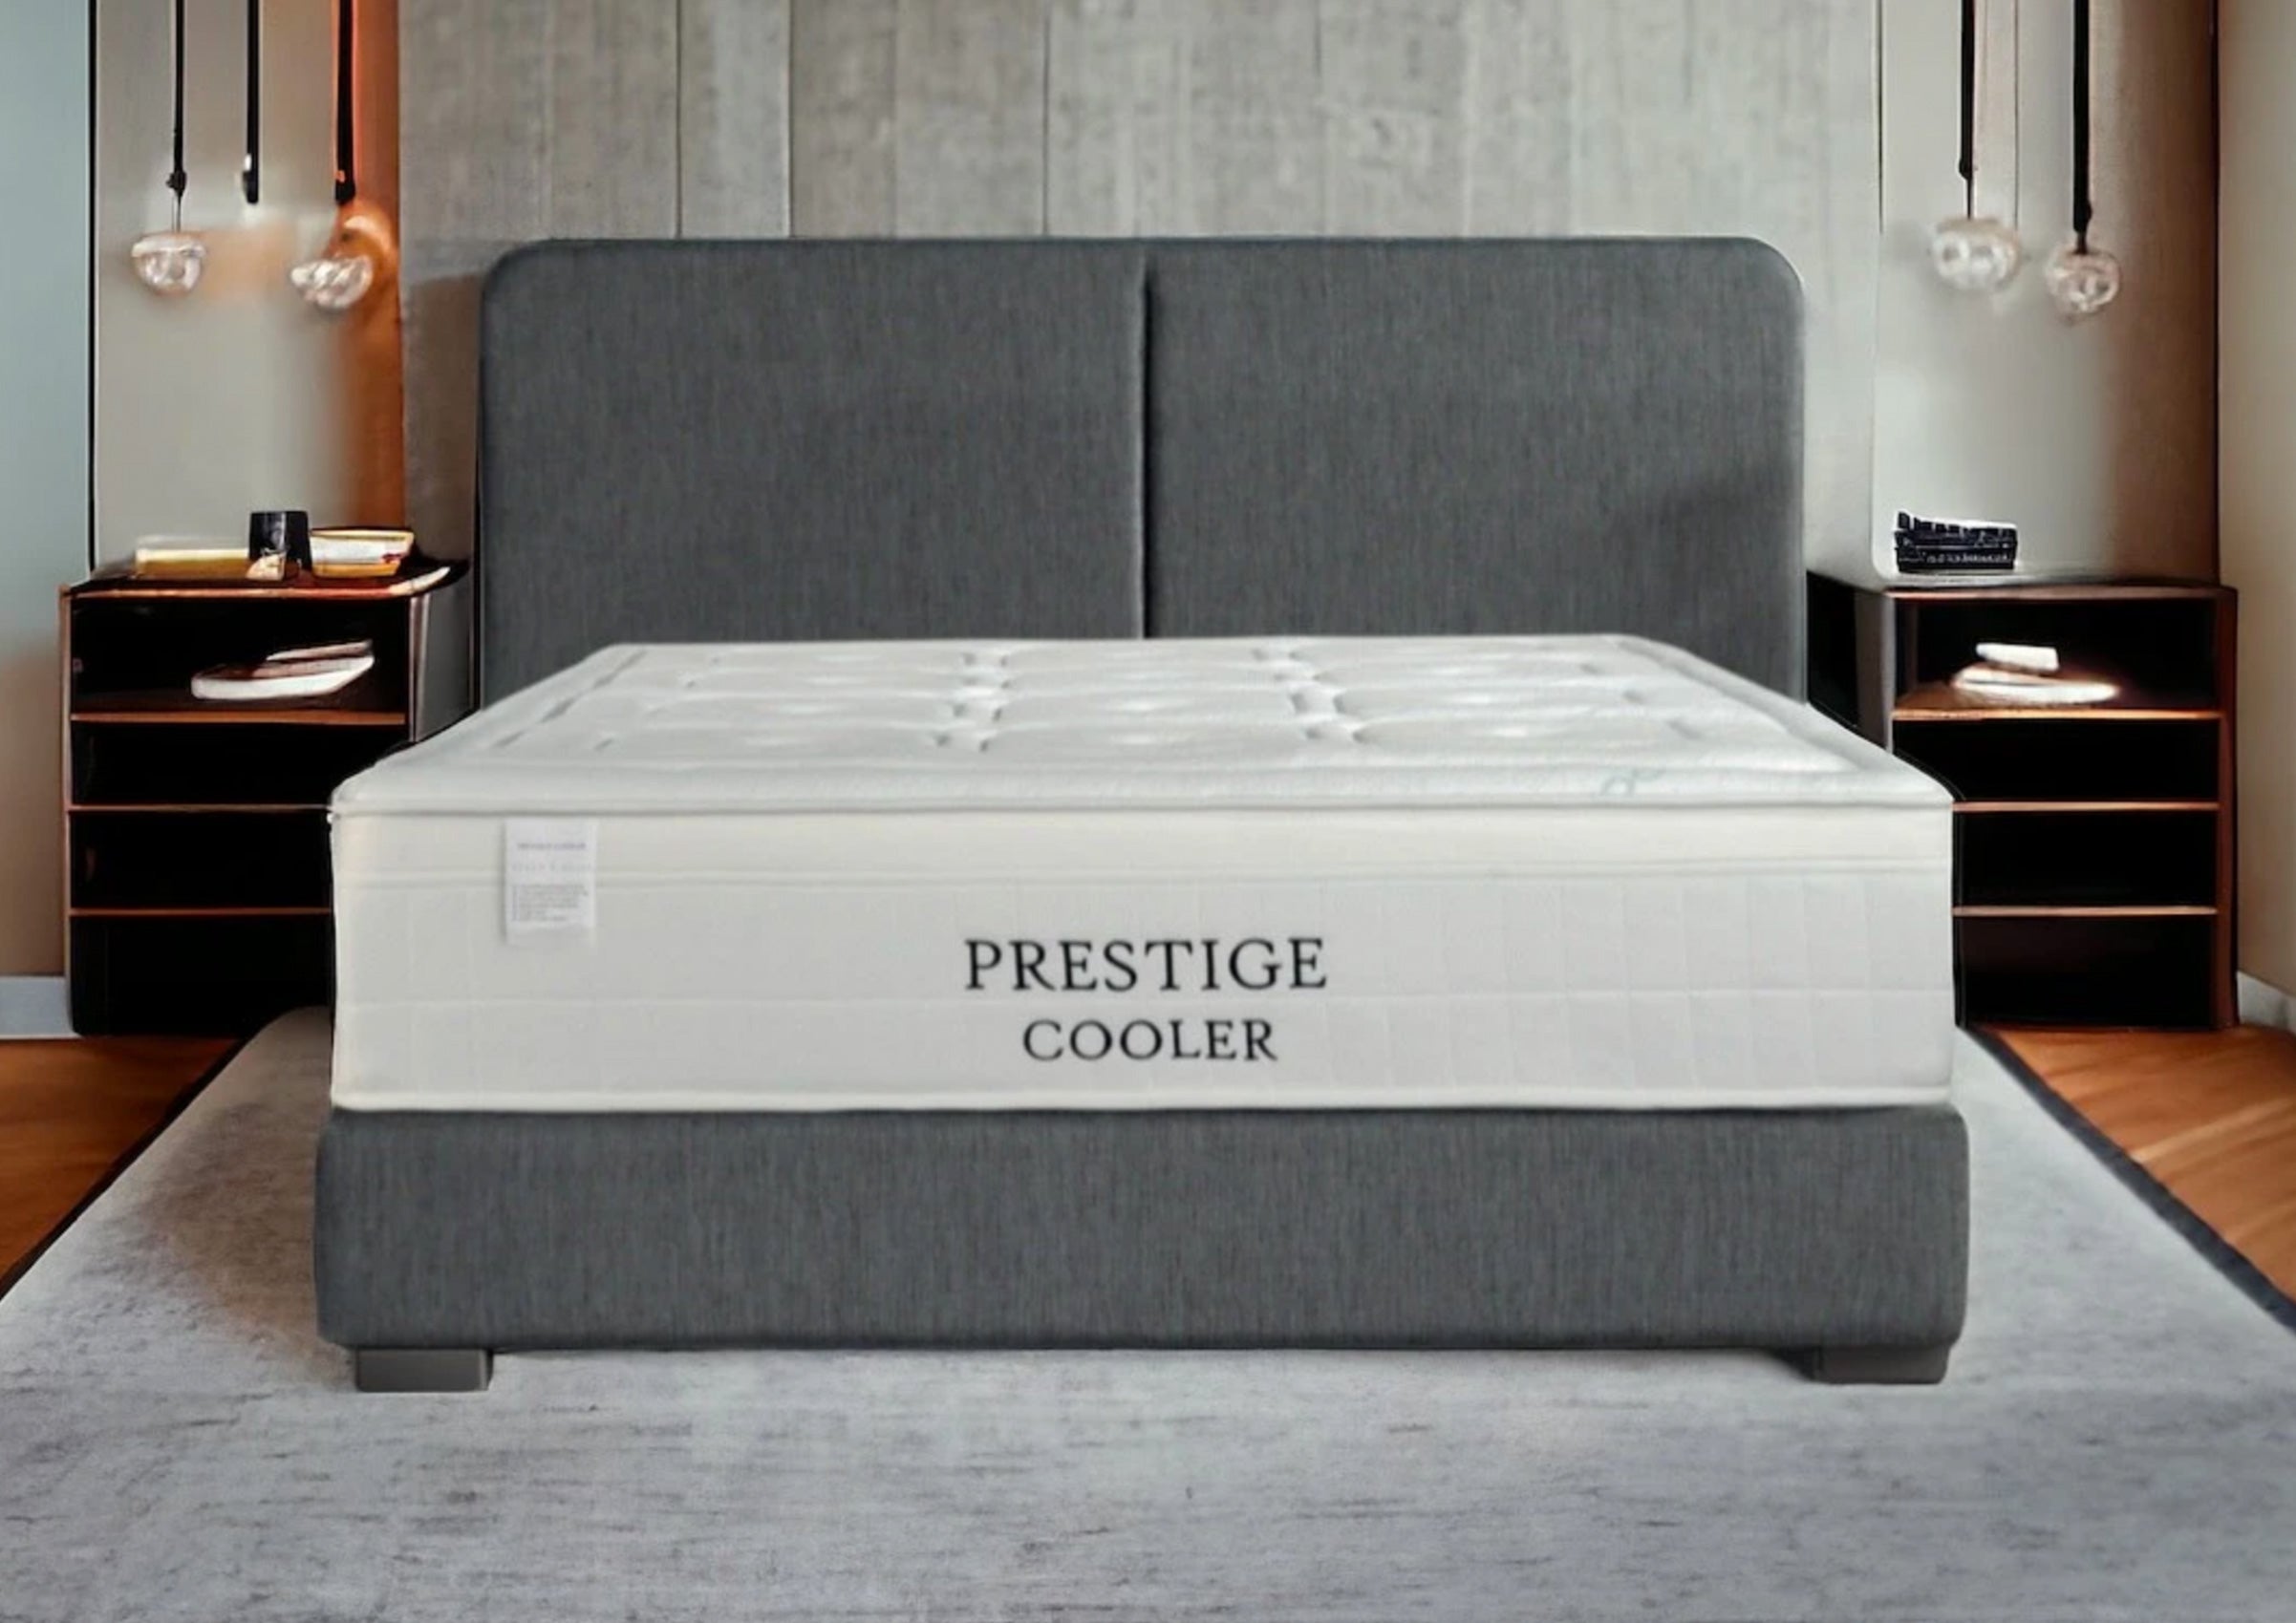 Baker and Wells Prestige Cooler mattress Express Delivery